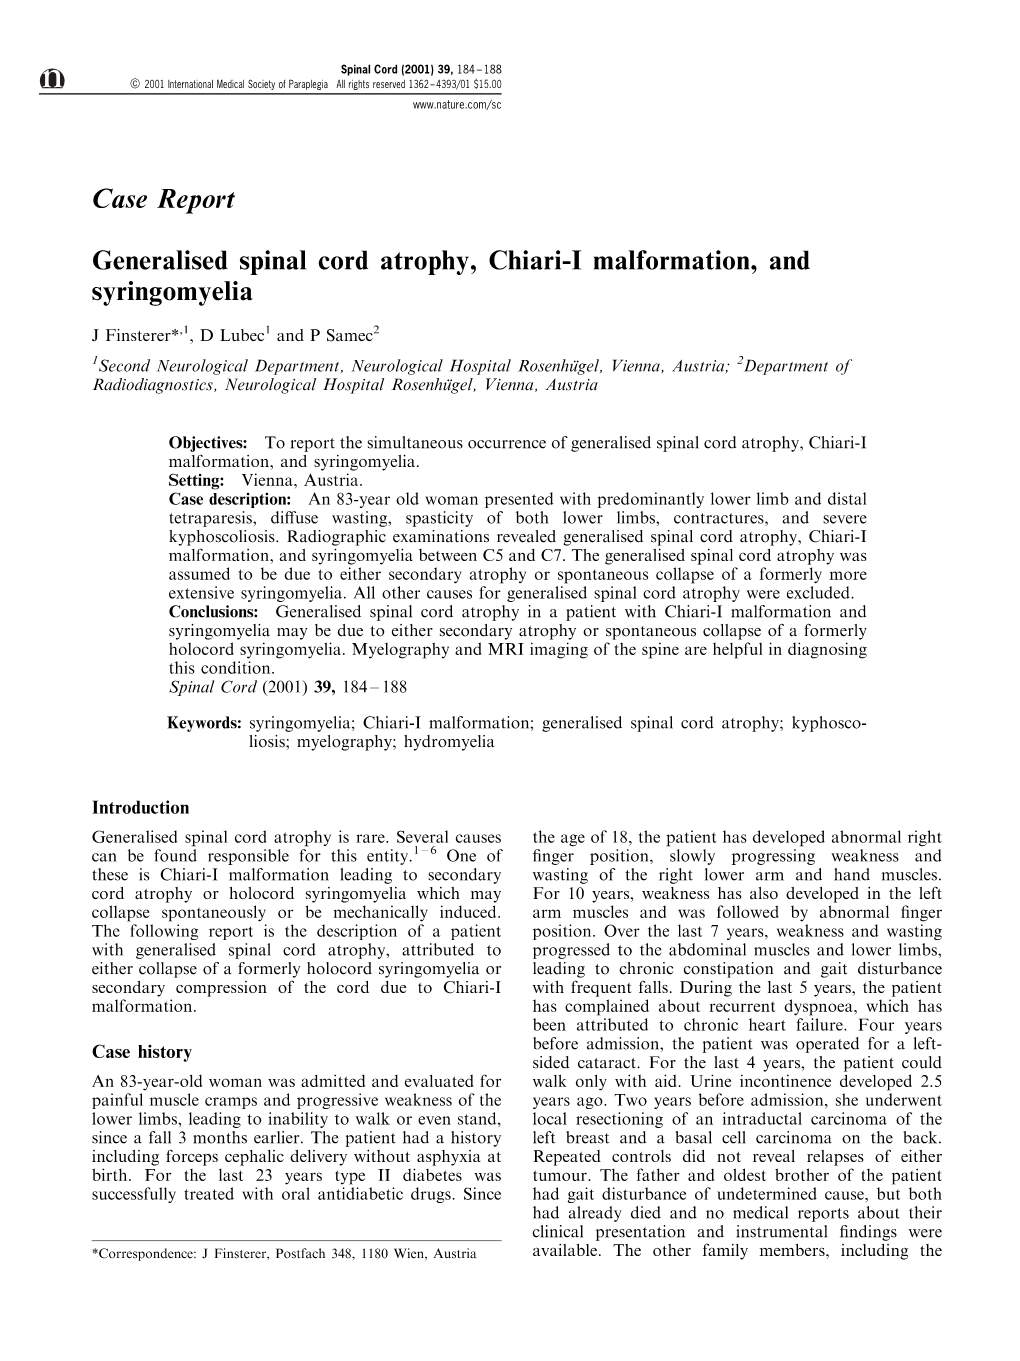 Generalised Spinal Cord Atrophy, Chiari-I Malformation, and Syringomyelia